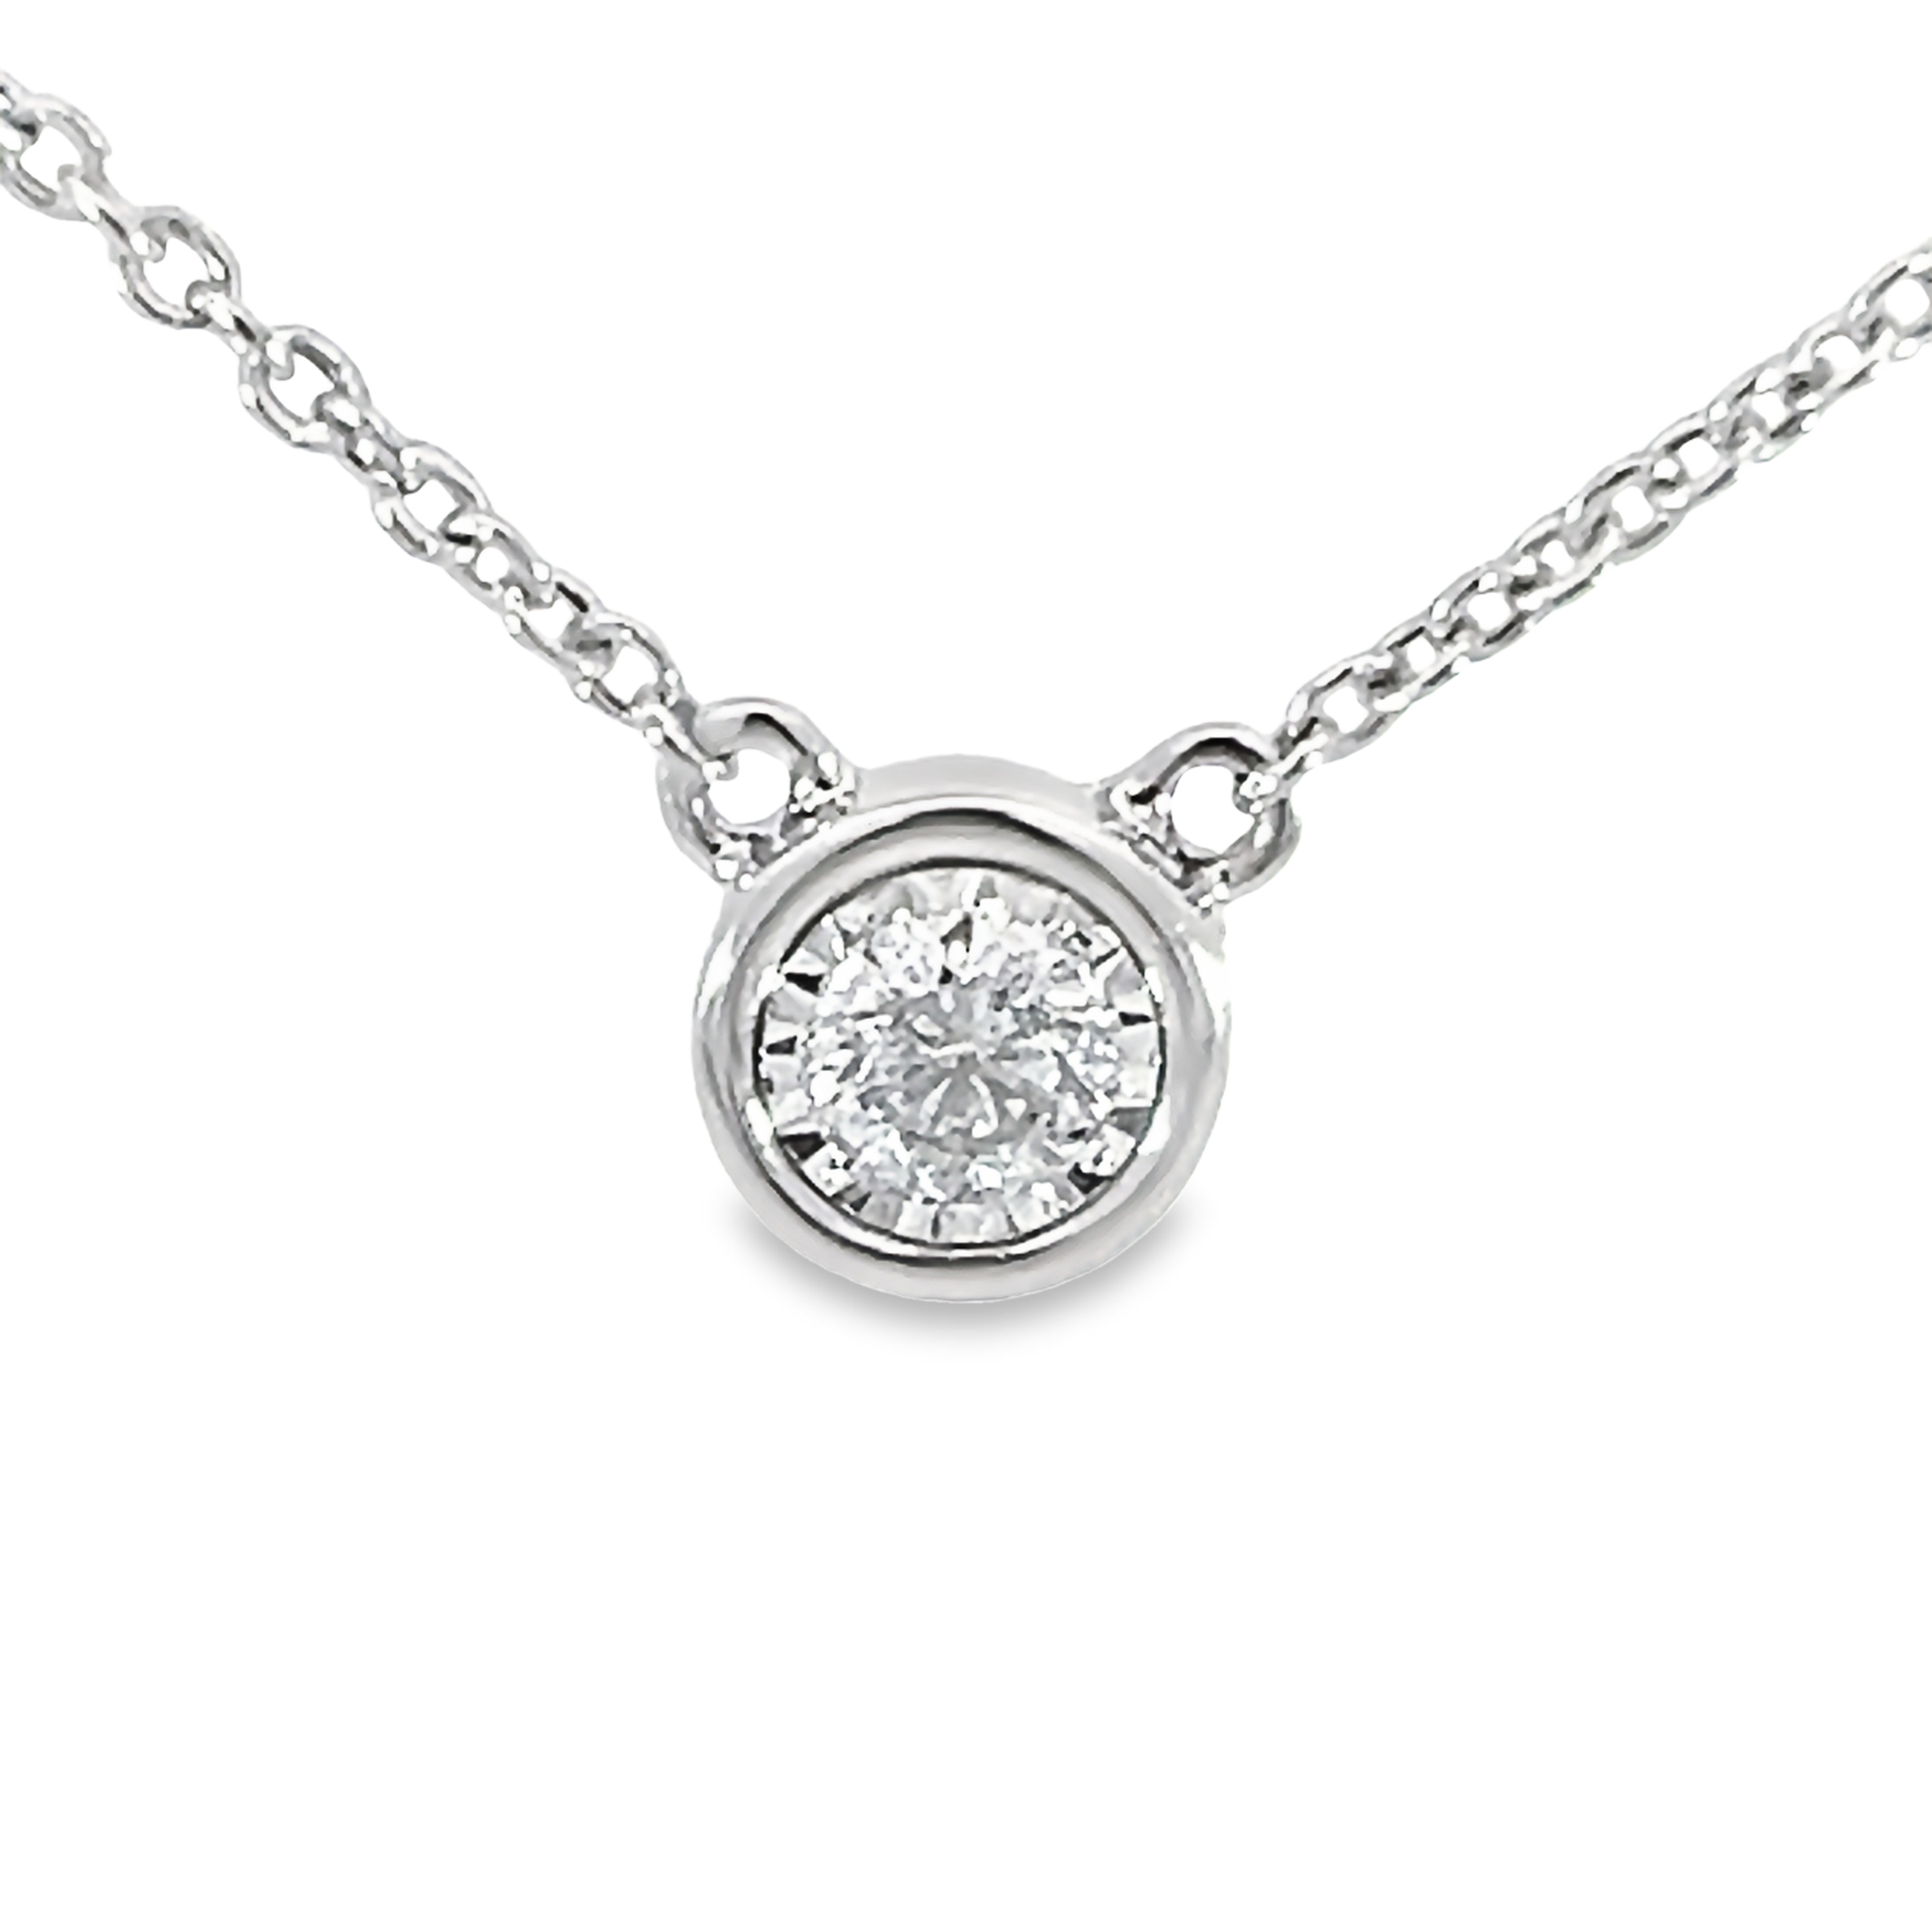 14k White Gold Diamond Solitaire Necklace